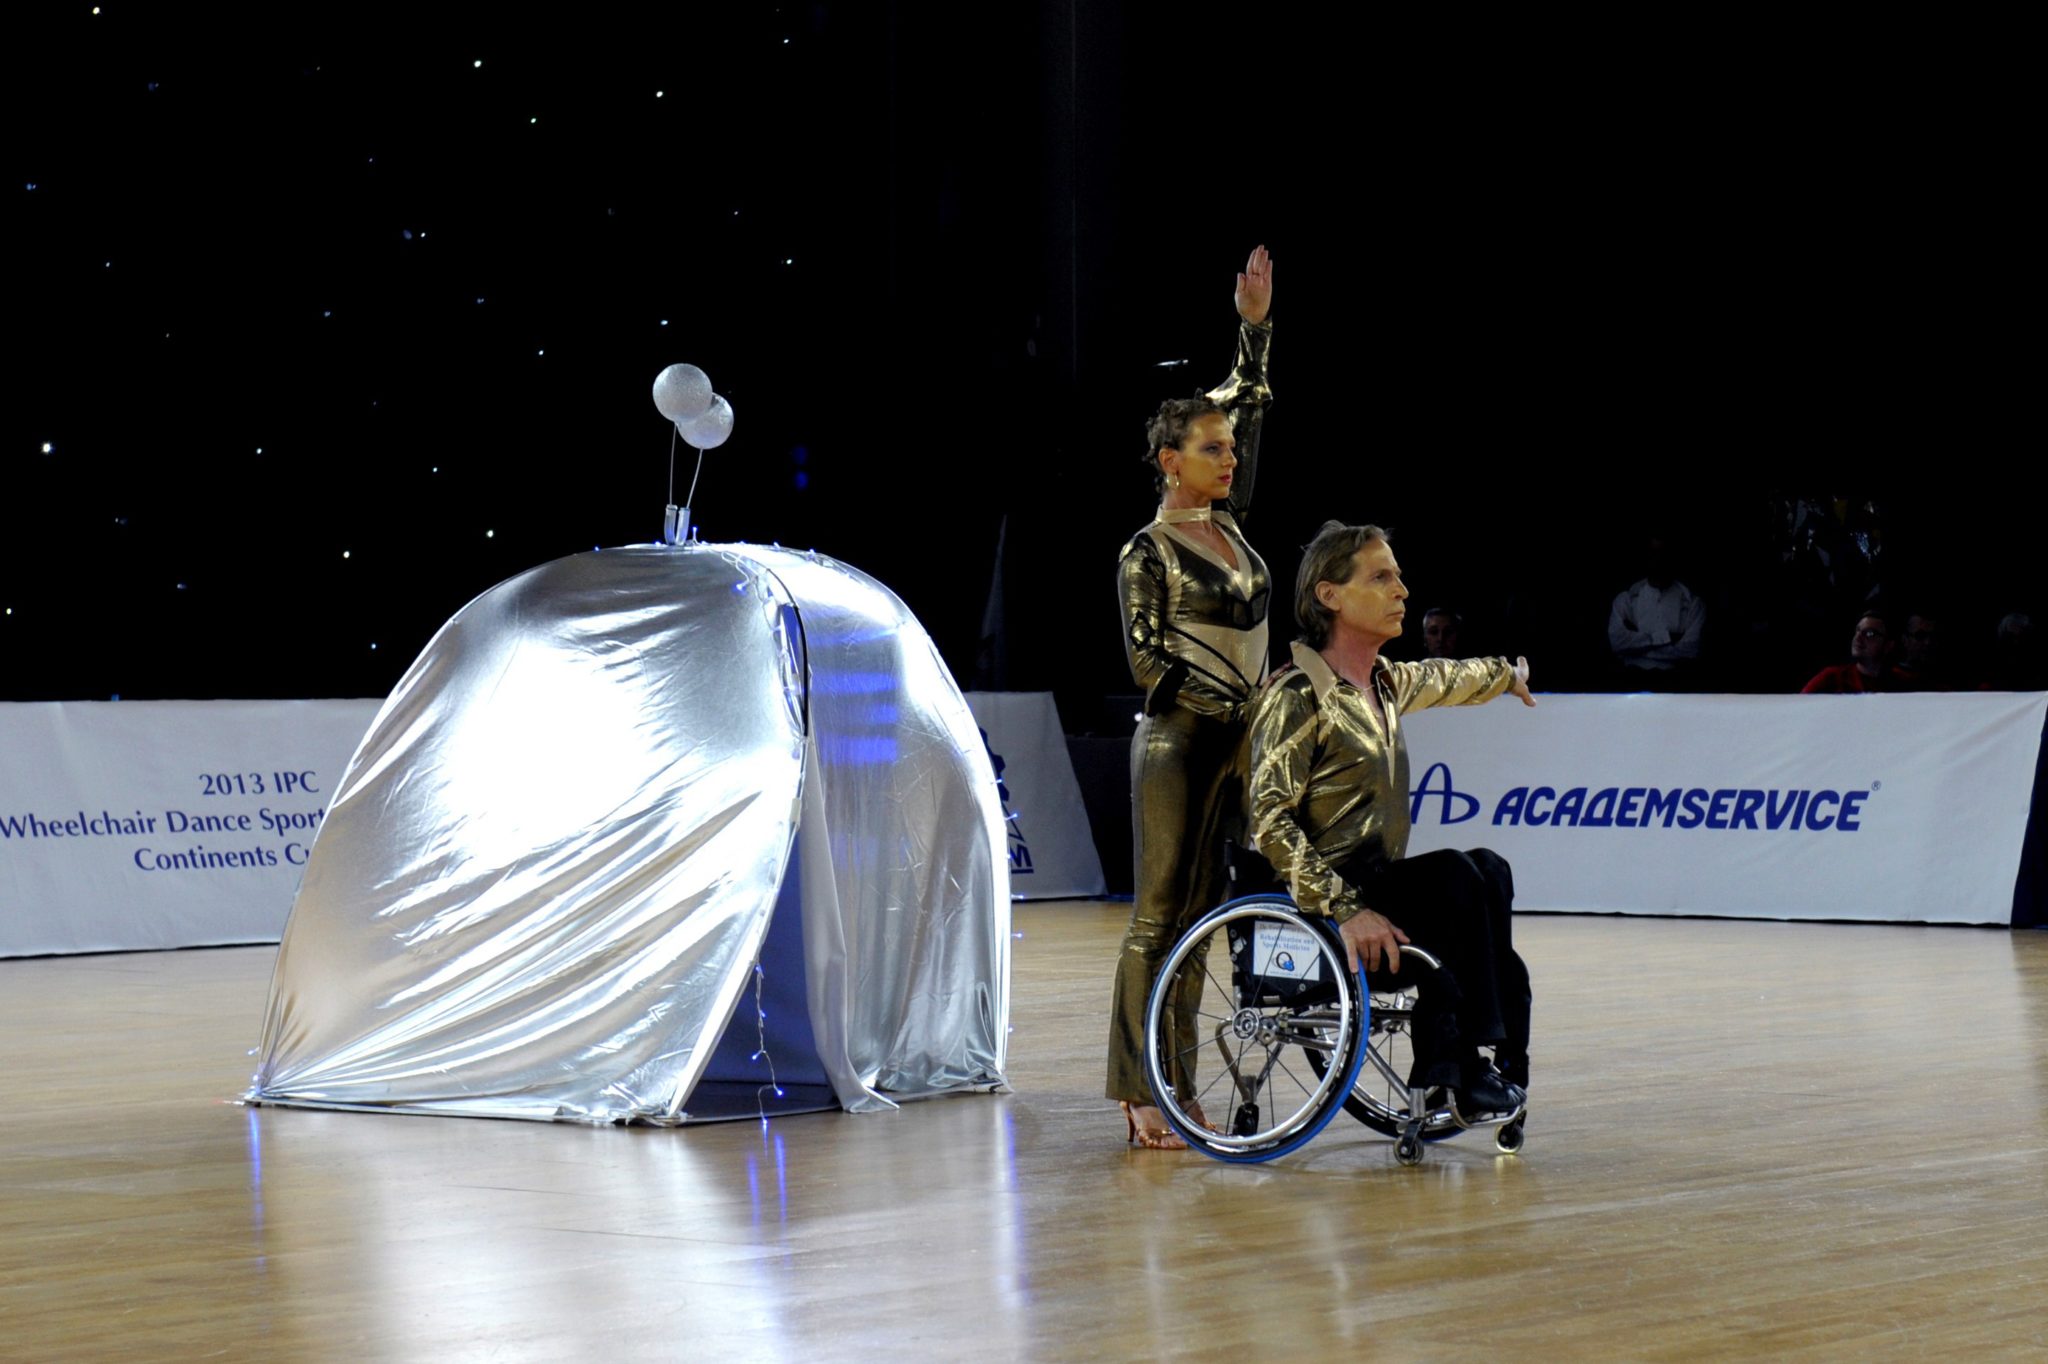 image: "Robot" wheelchair dance